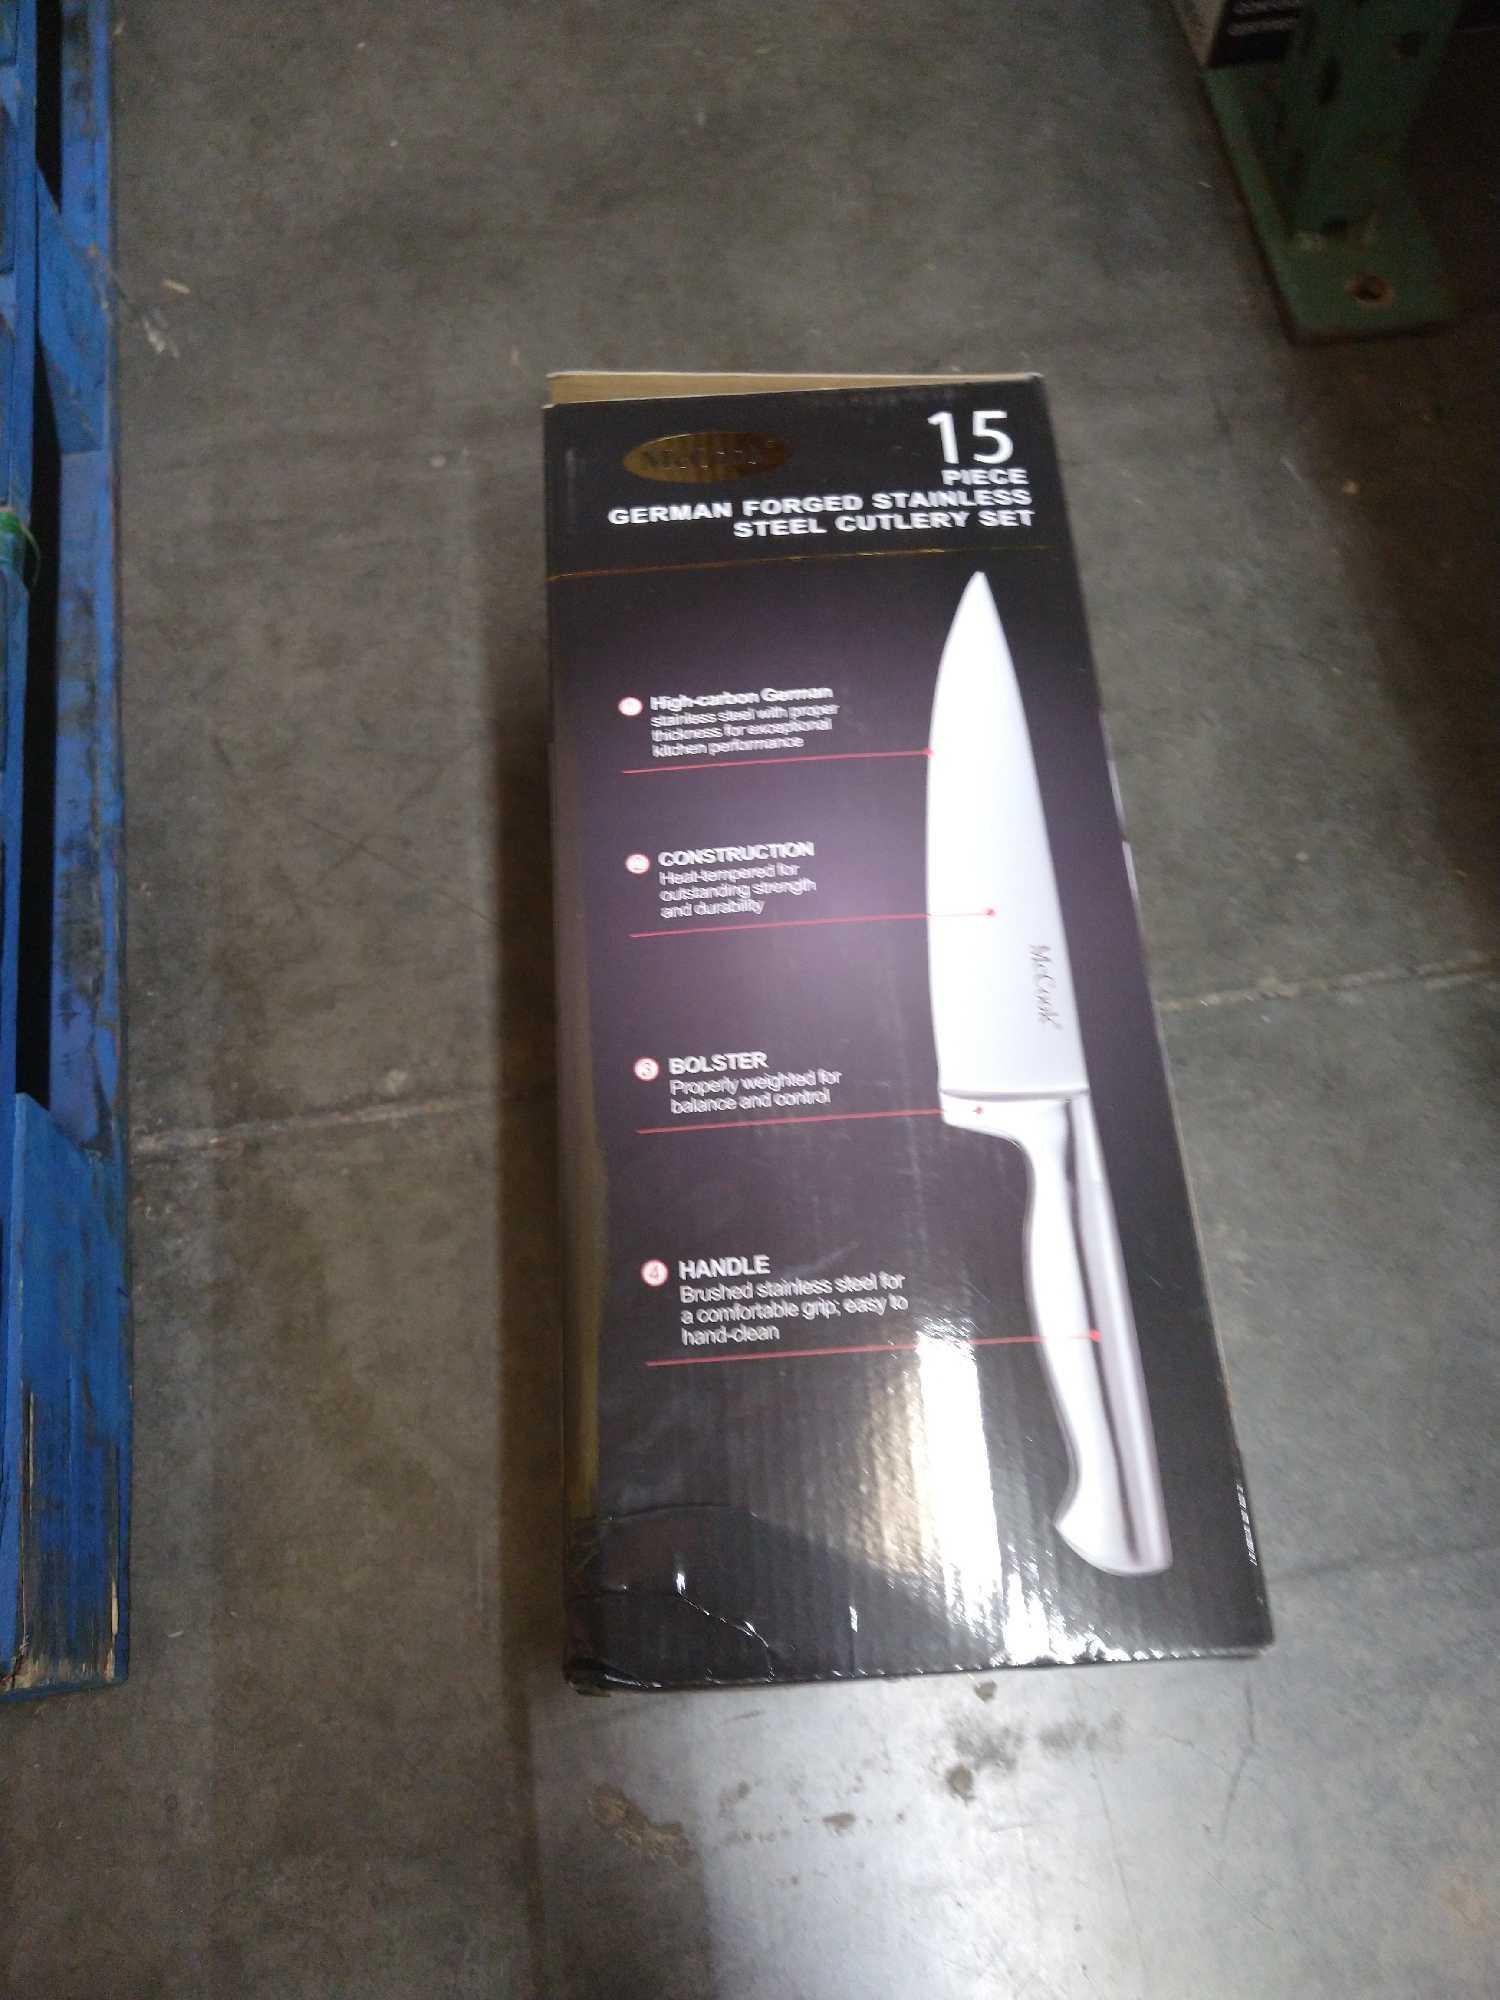 McCook German Stainless Steel Kitchen Knife Block Sets with Built-in Sharpener, $69.98 MSRP